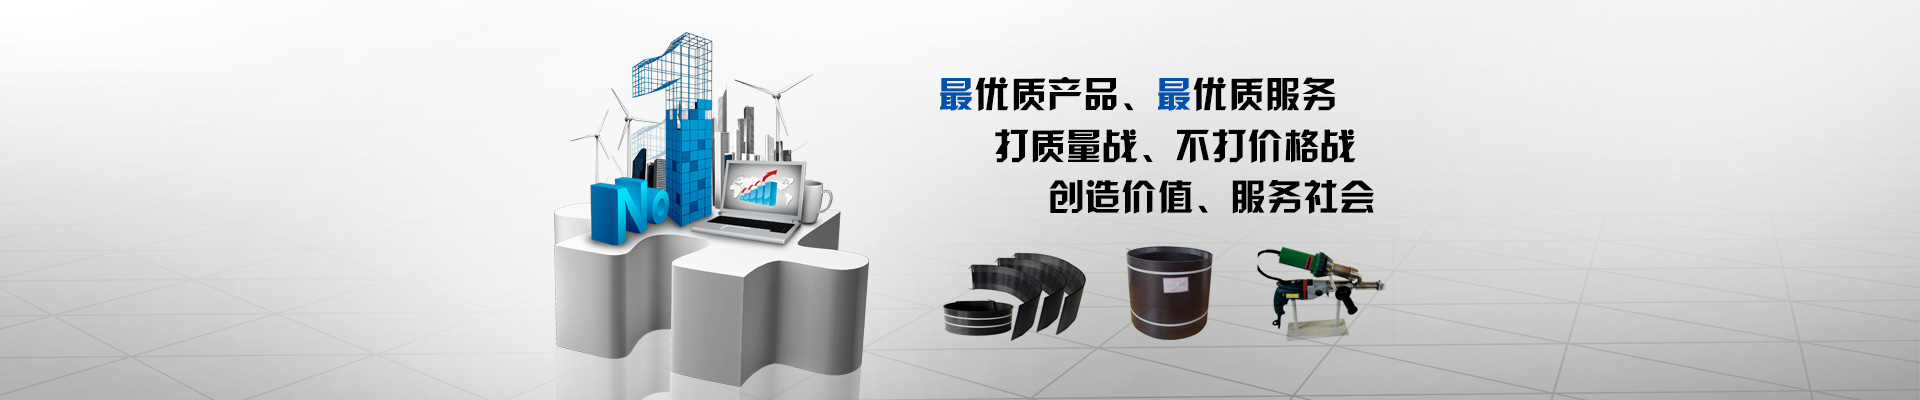 Qingdao tsd Plastic Co.,Ltd logo